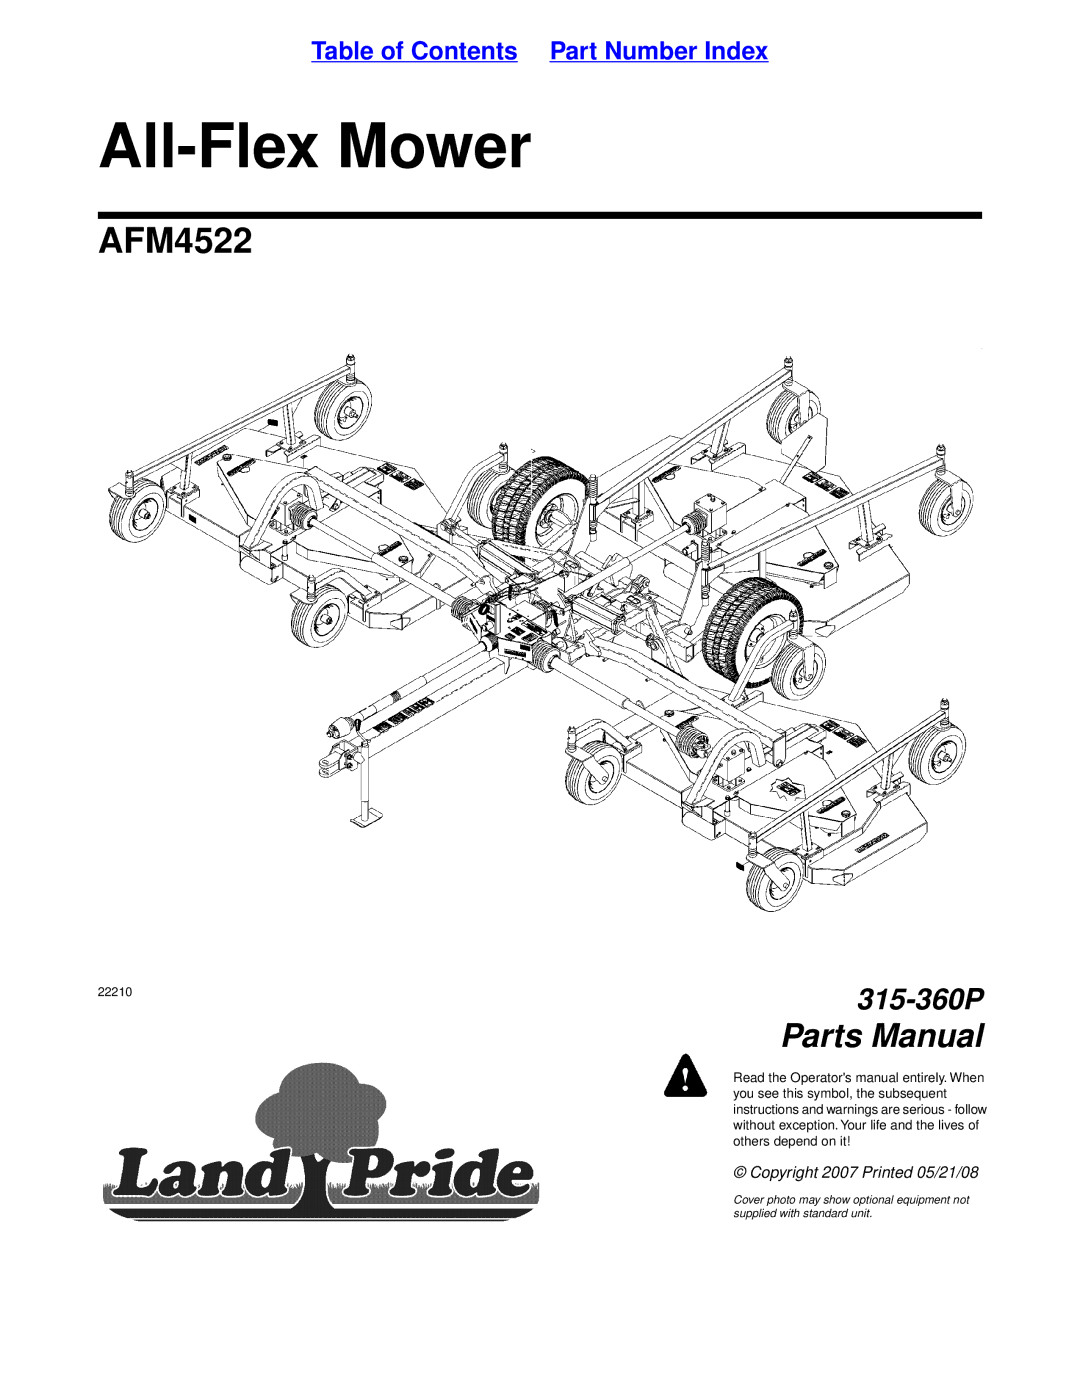 Land Pride AFM4522 manual All-Flex Mower 